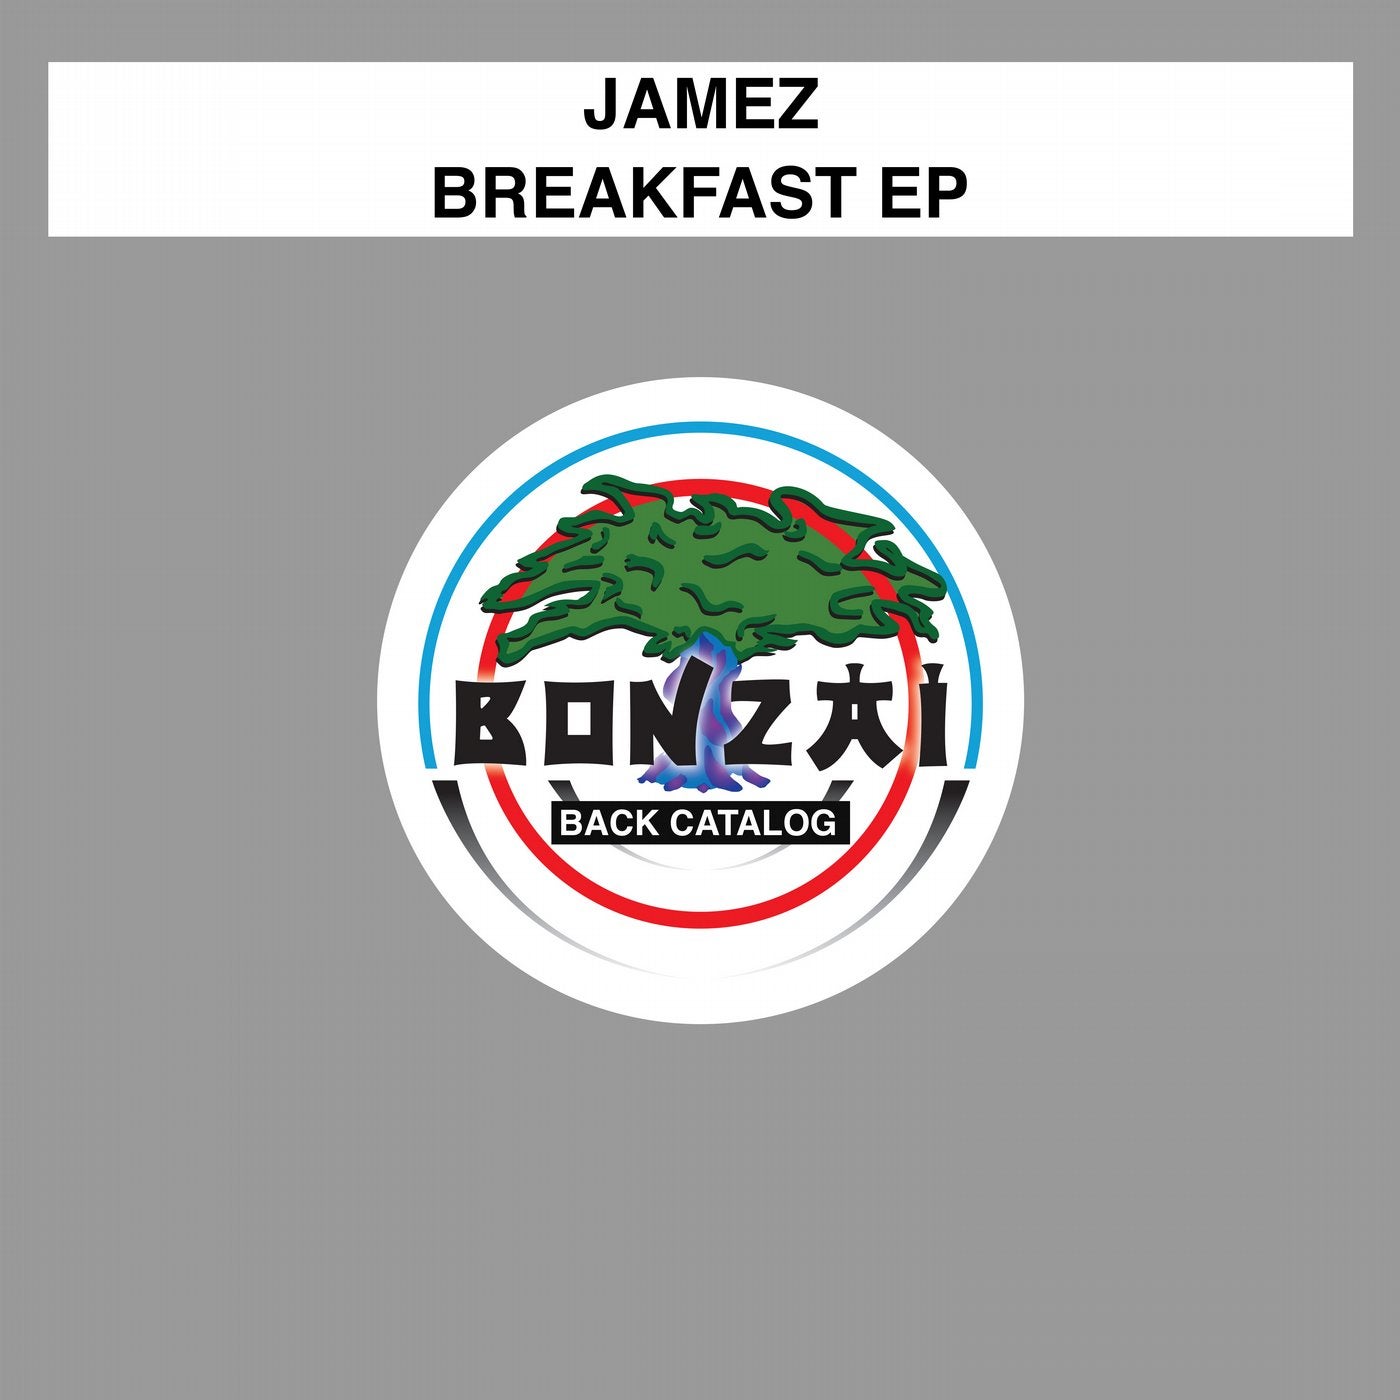 Breakfast EP